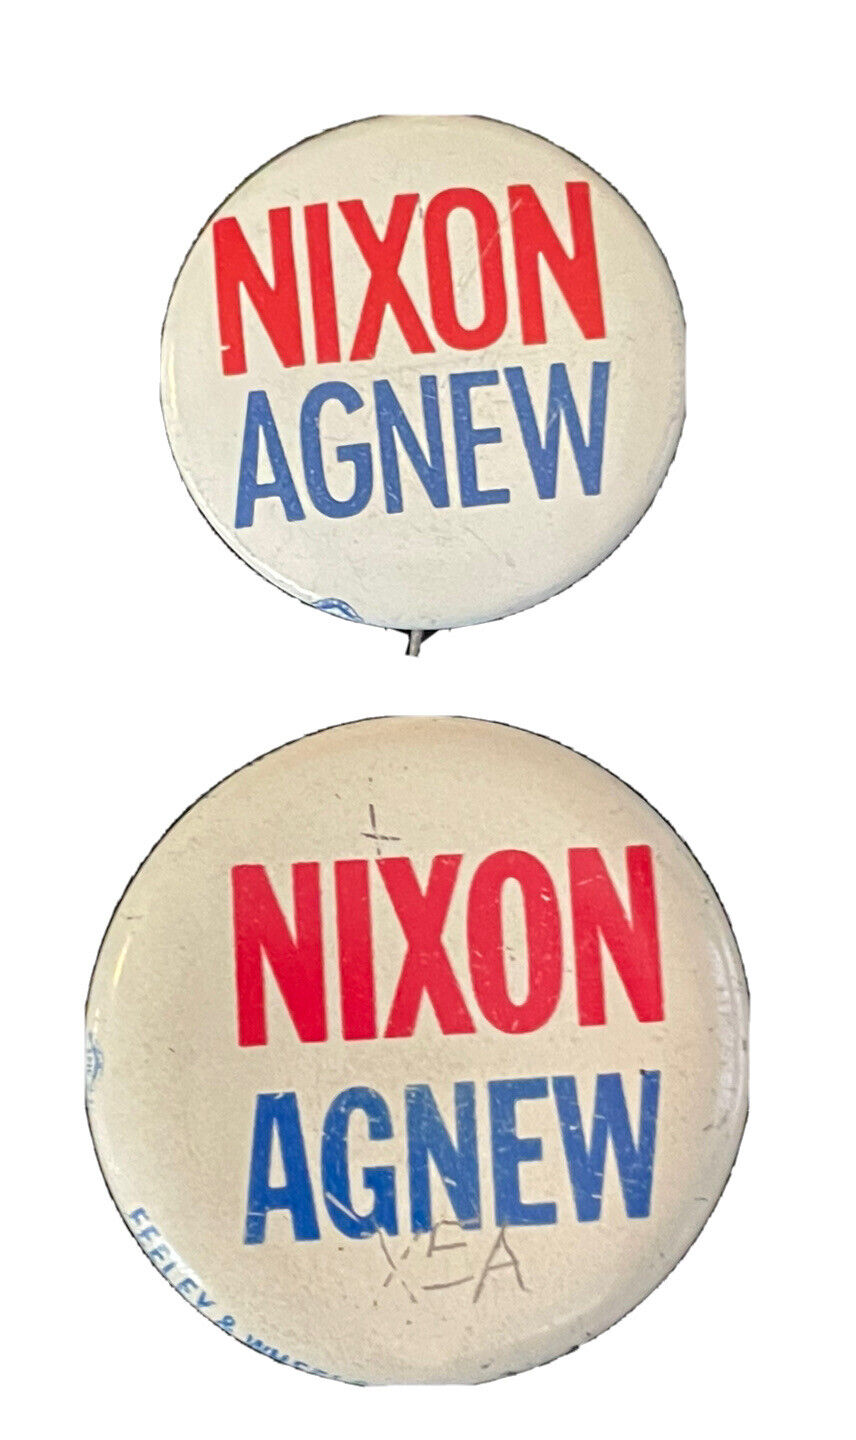  Nixon Agnew 1968 Button 36mm 29mm Feeler & Wheeler 370 N.Y.C 2 Pin Lot Official